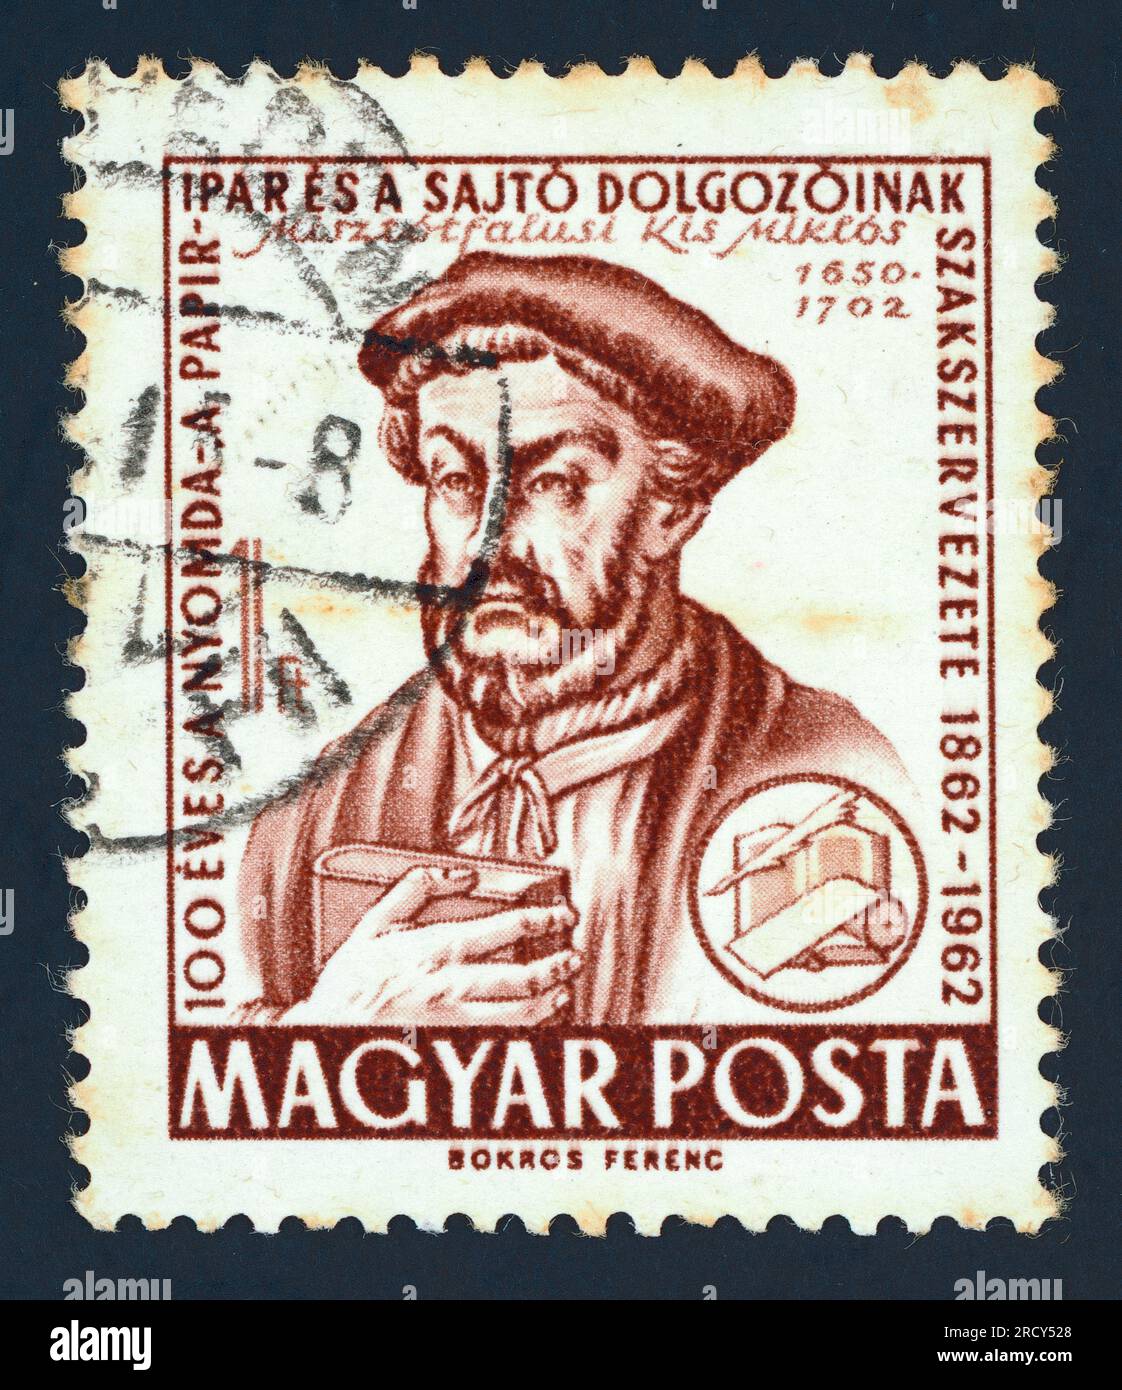 Miklós Tótfalusi Kis (Hungarian: Misztótfalusi Kis Miklós) (1650 – 1702) Stamp issued in Hungary on the 100th Anniversay of the founding of the Trade Union of Printers (1862 – 1862). Face value: 1 Ft – Hungarian forint. Stock Photo